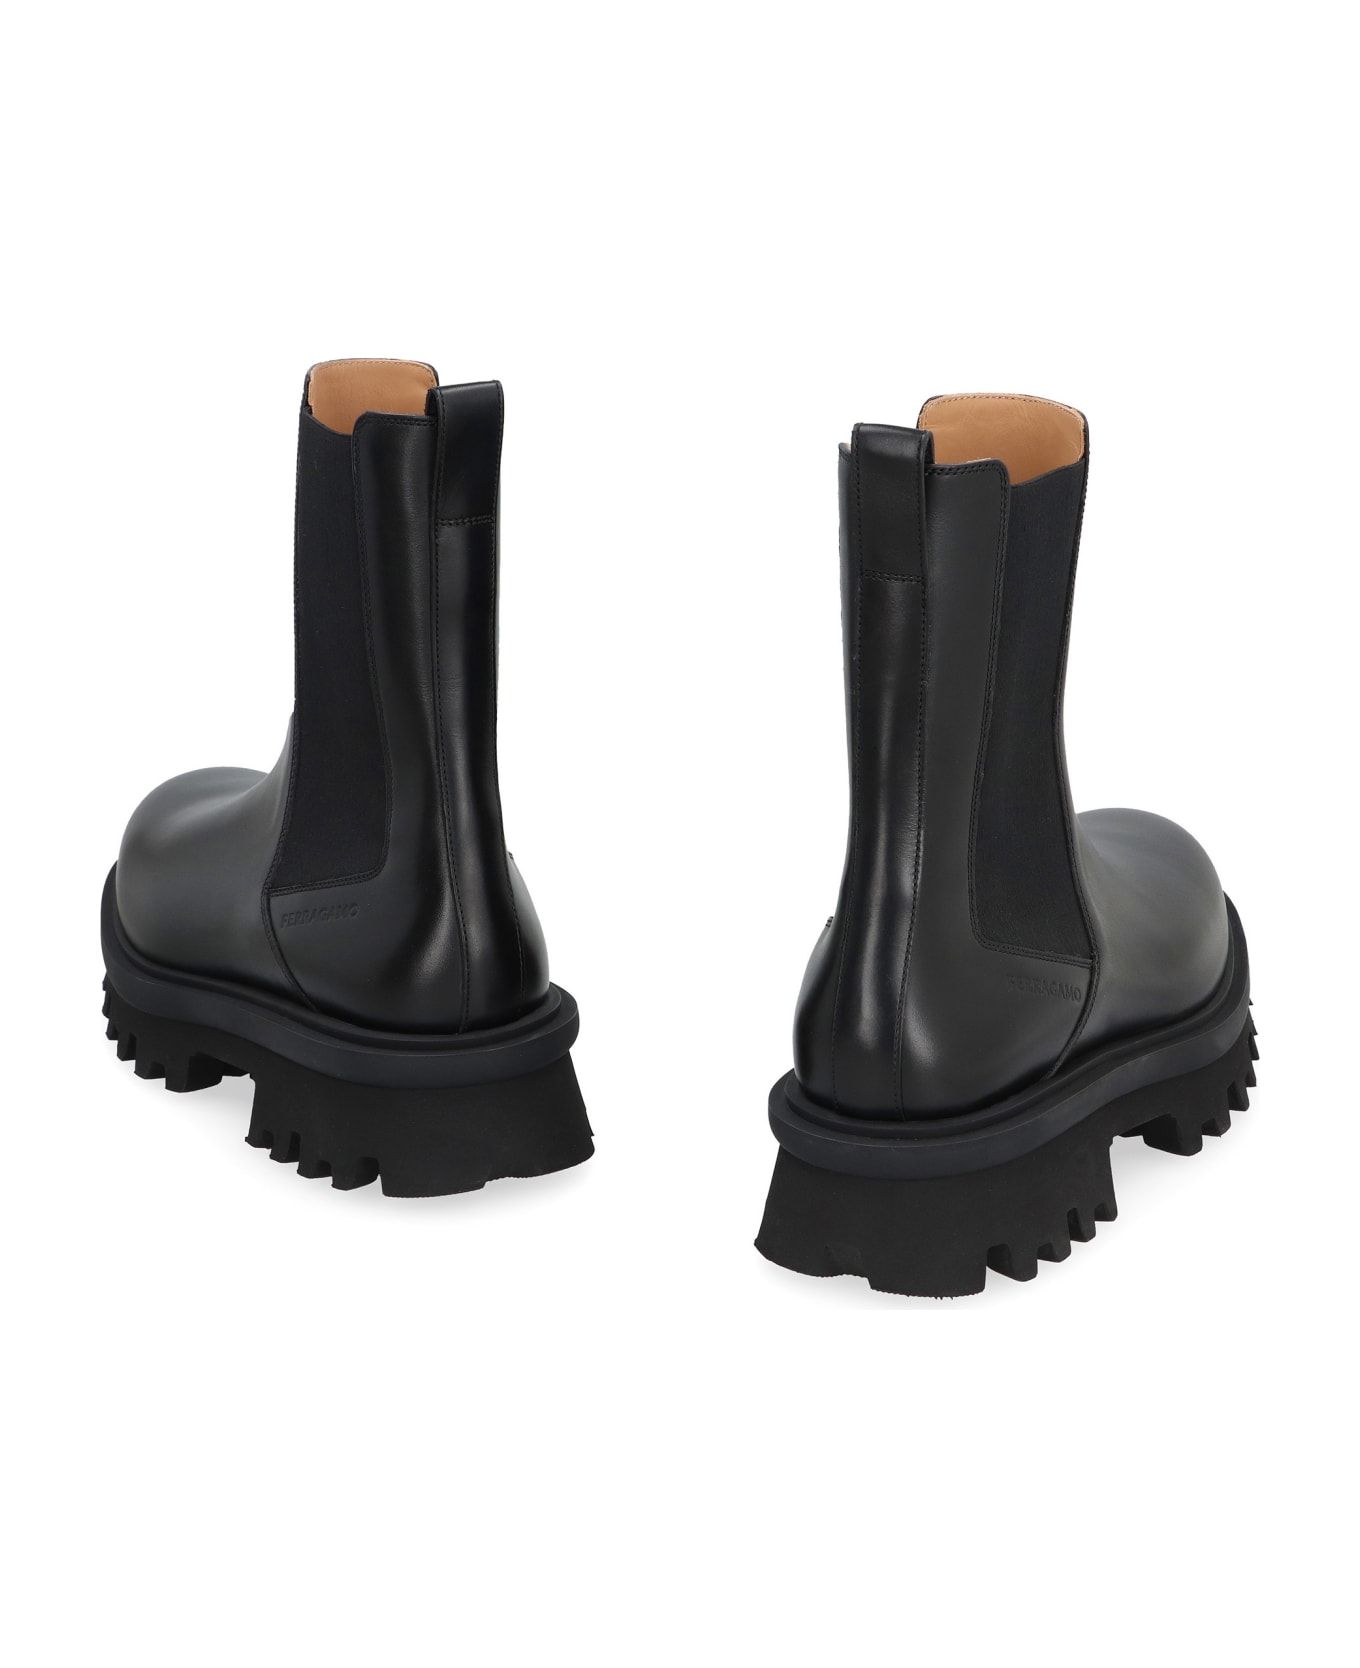 Ferragamo Leather Chelsea Boots - black